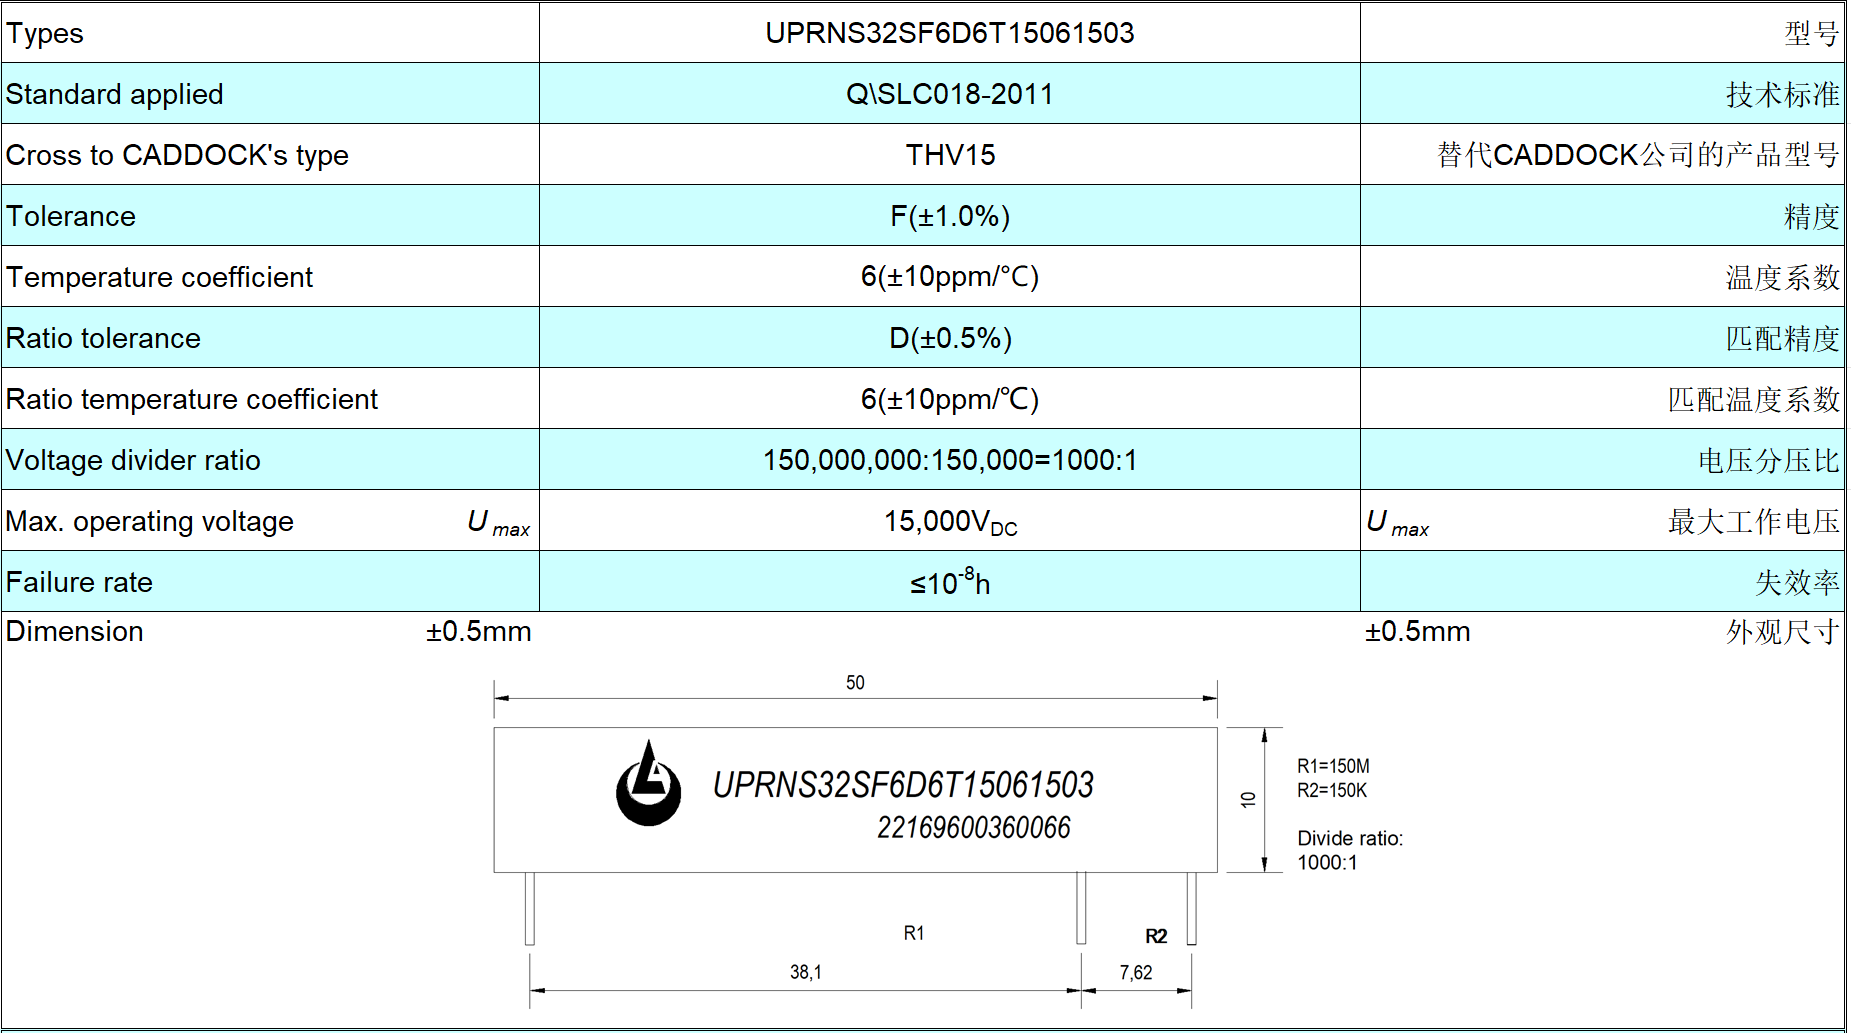 UPRNS32SF3D6T99951003 ネットワークは、カドック
 の THV15
-A150M-1.0-10 よりも 0.5% を超える厳しいレシオ トレランスを提供します。